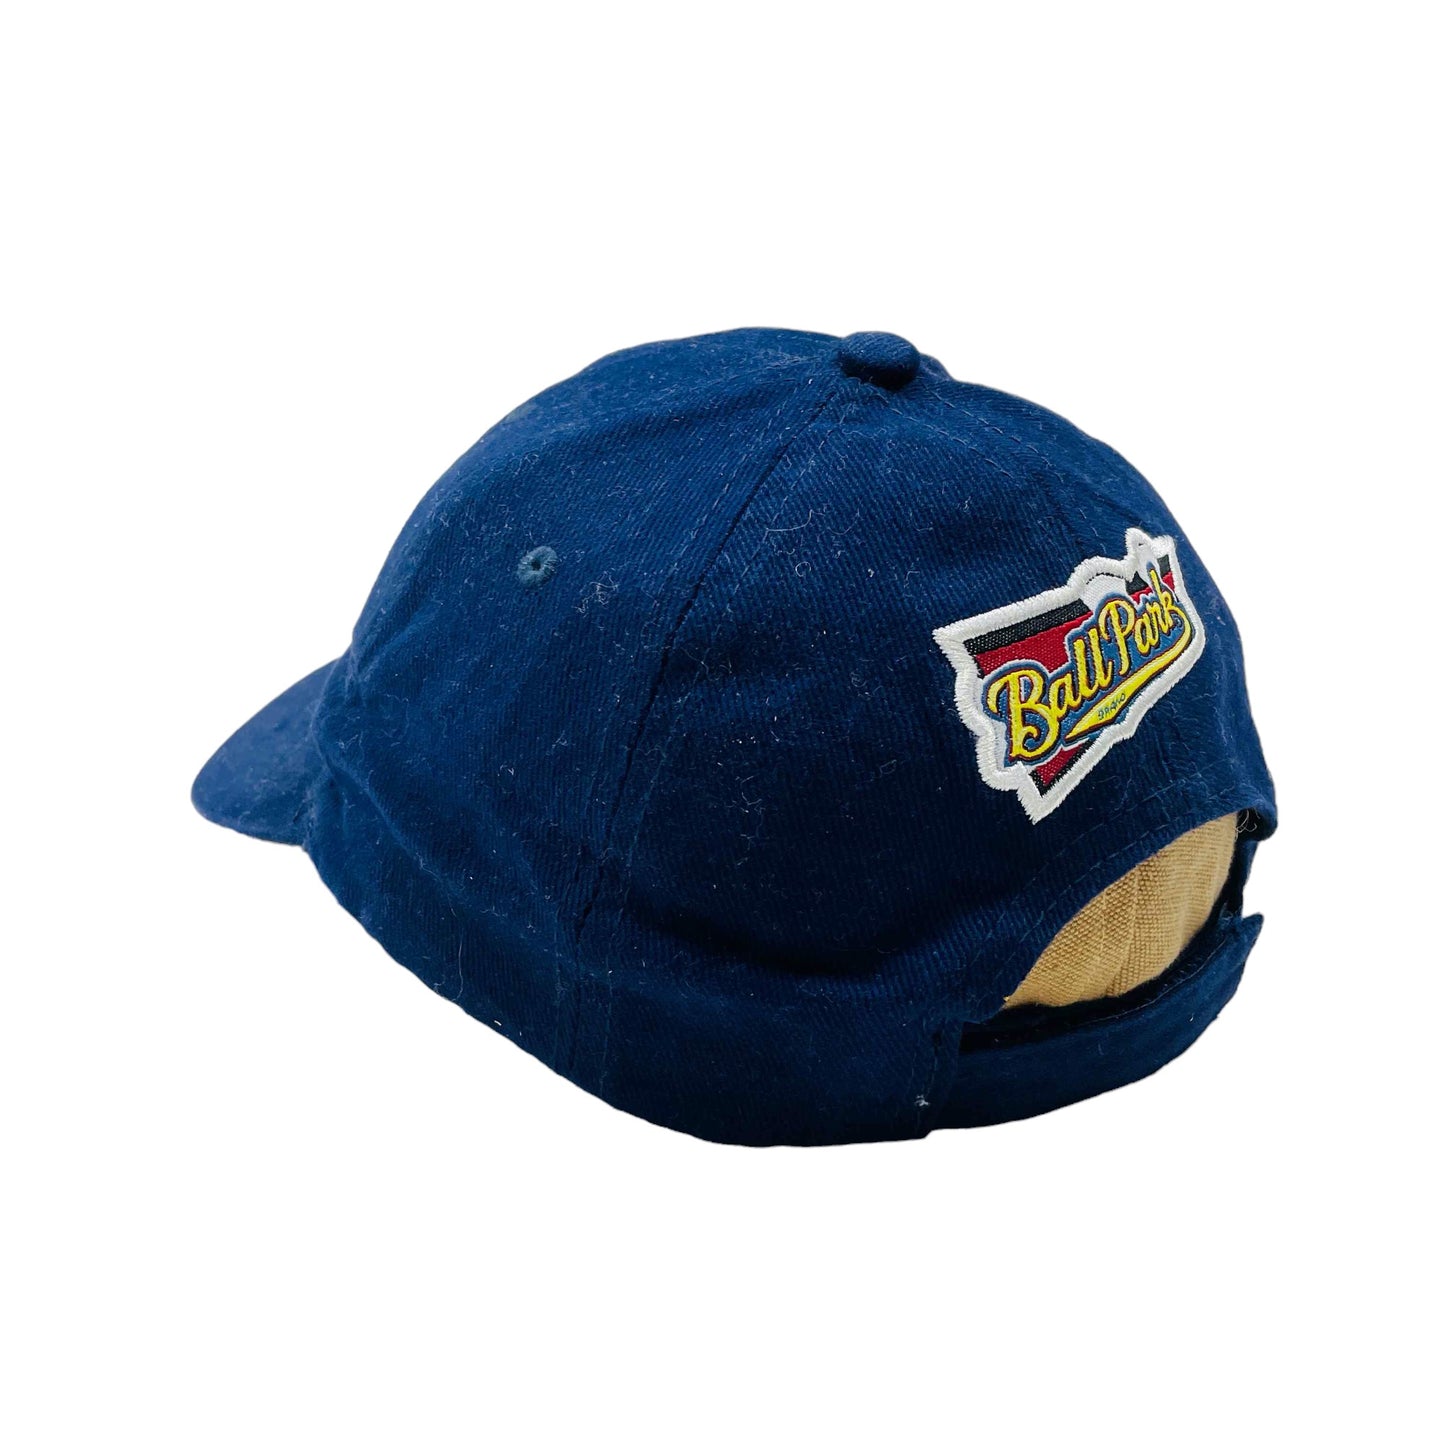 Buy Wholesale China Wholesale Baseball Caps Mlb Hats Adjustable